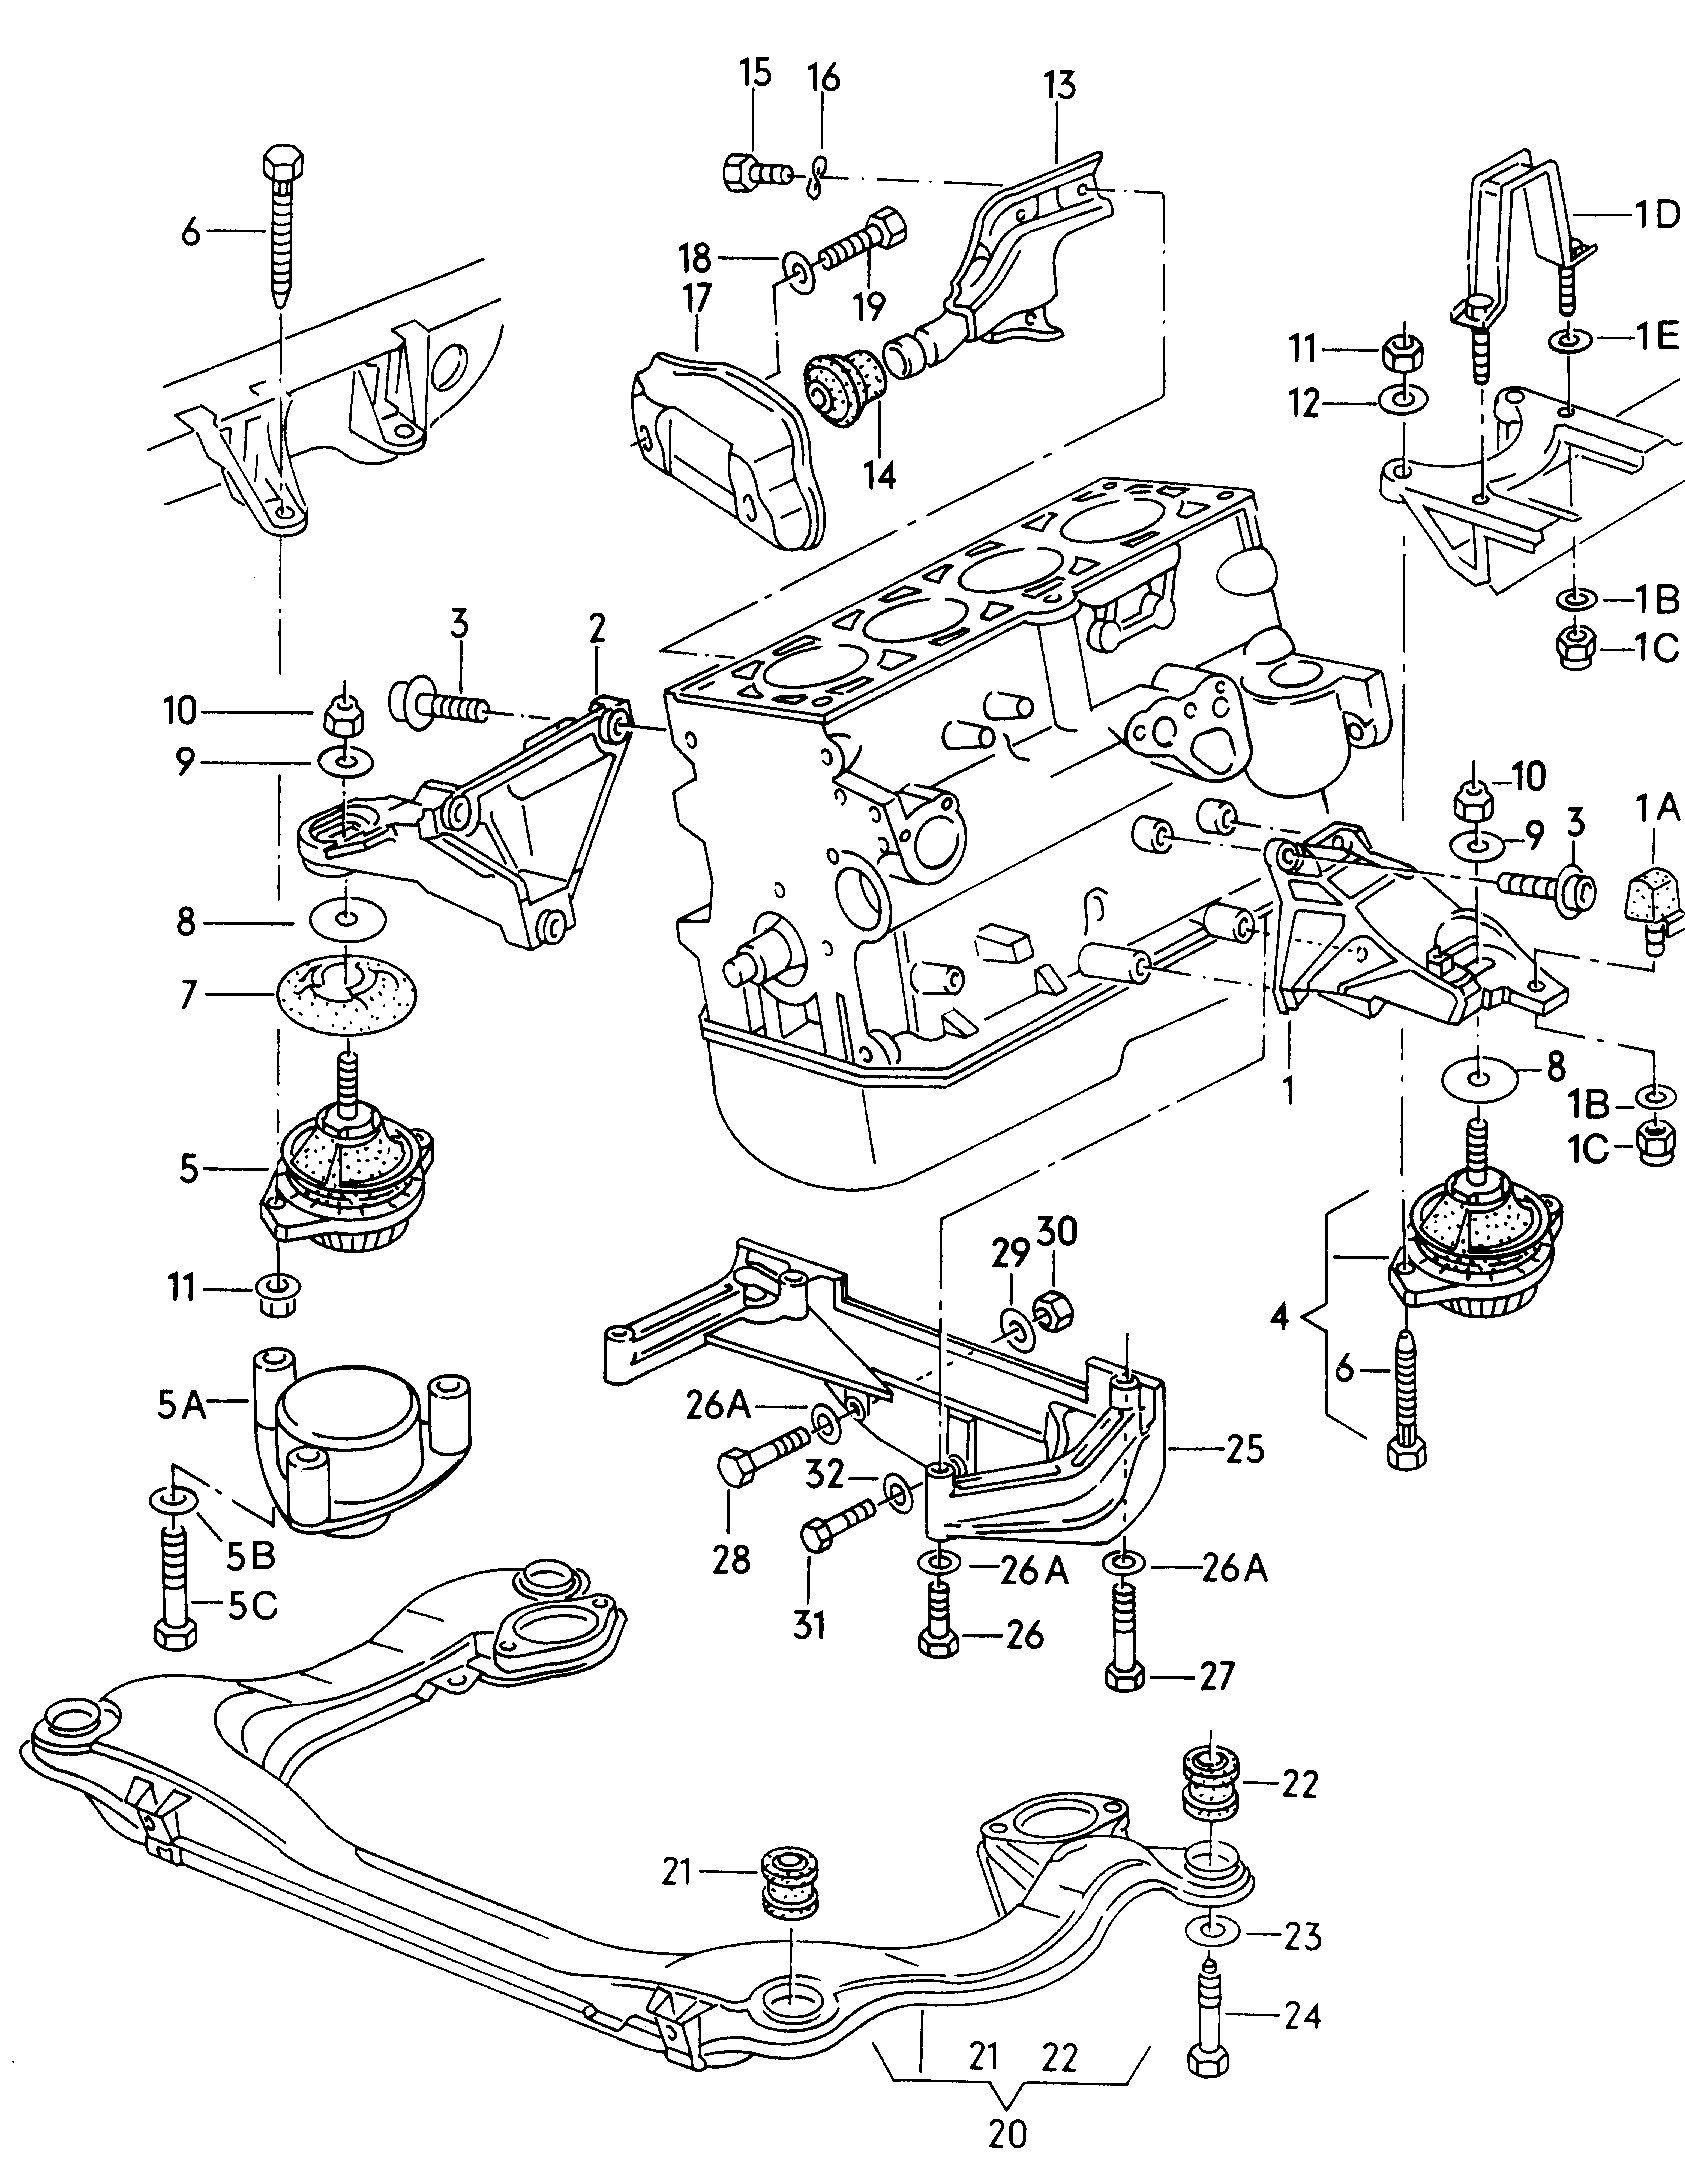 parti fissaggio per motore 1,8-2,0l - Audi Cabriolet - aca